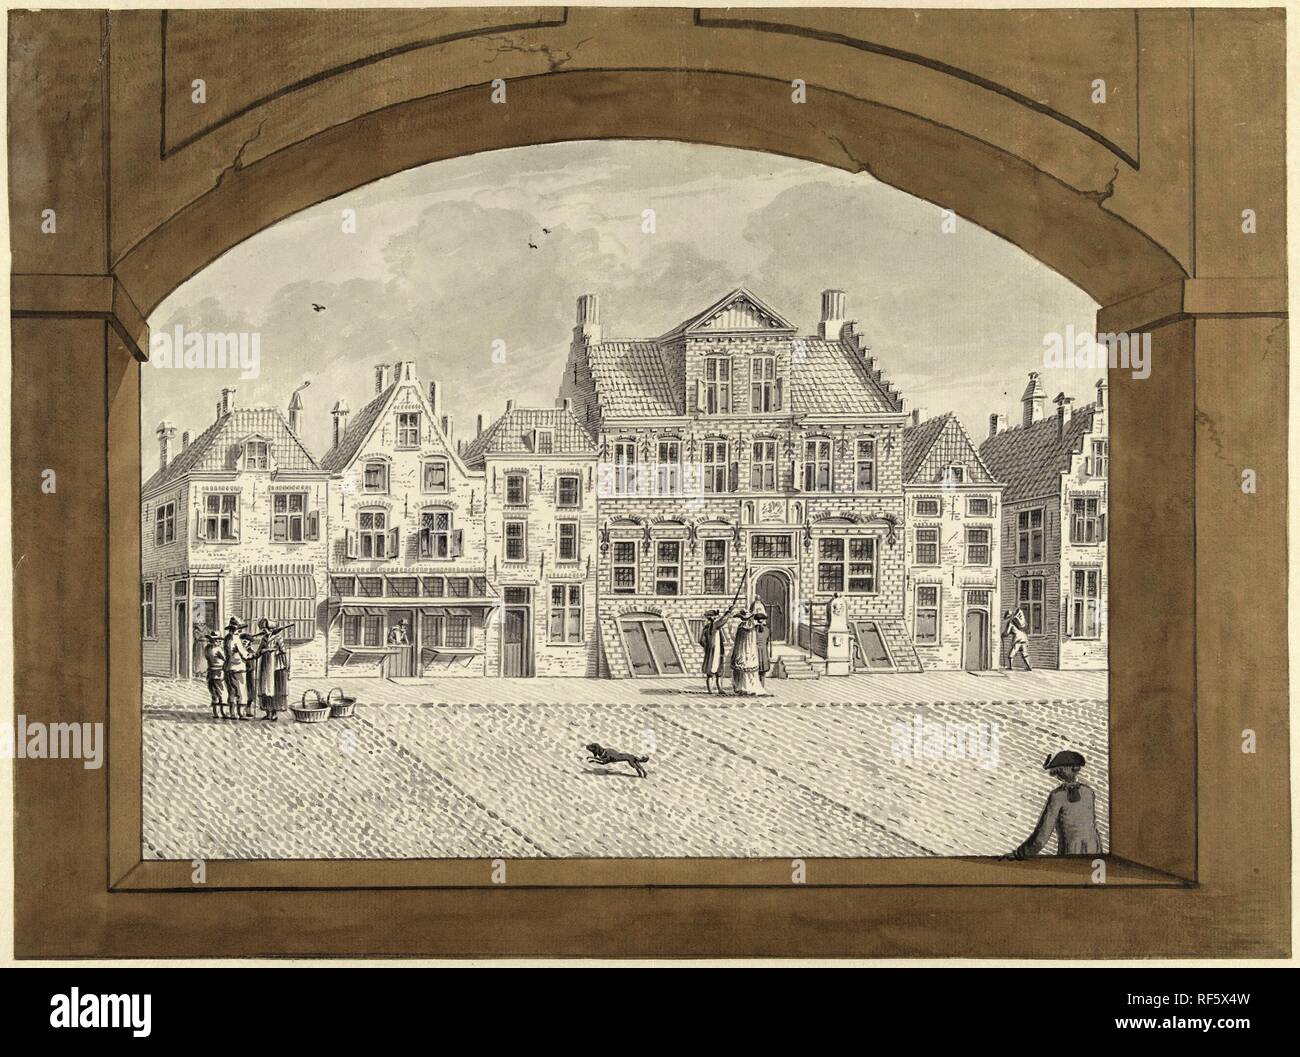 The house Hogelande in Middelburg. Draughtsman: Dirk Verrijk. Dating: 1744 - 1786. Measurements: h 333 mm × w 447 mm. Museum: Rijksmuseum, Amsterdam. Stock Photo